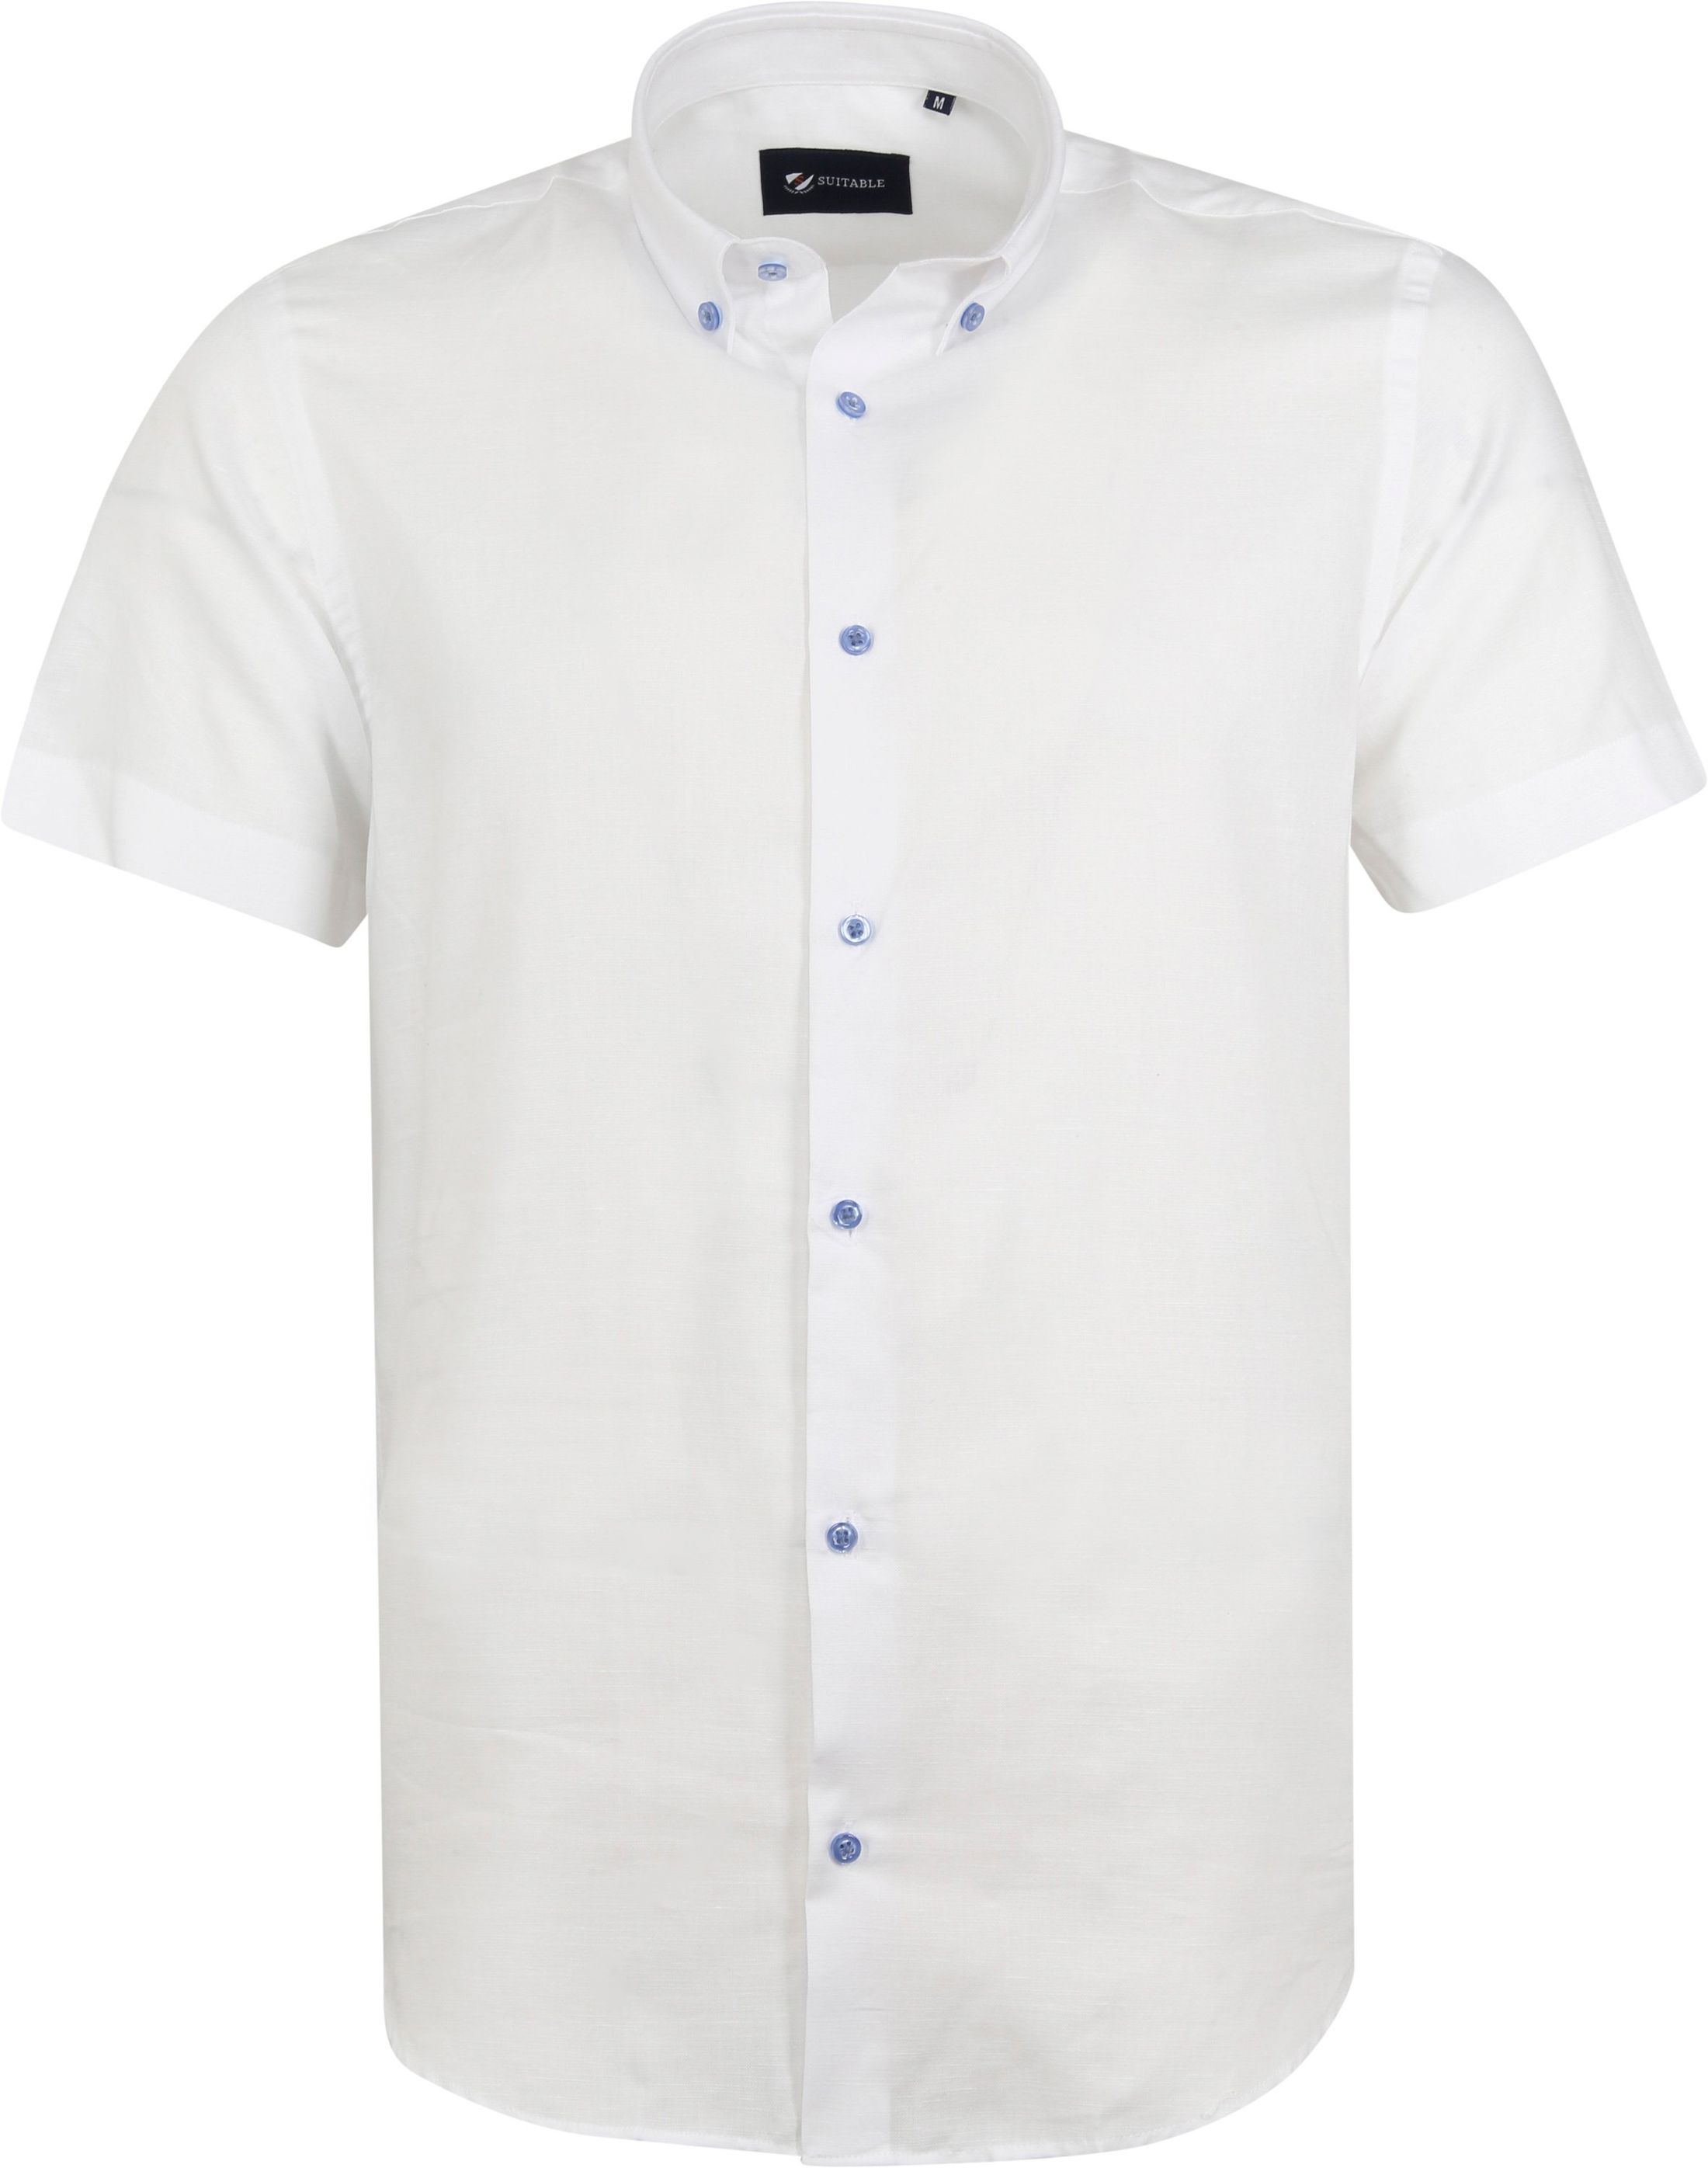 Suitable Short Sleeve Shirt White size 3XL